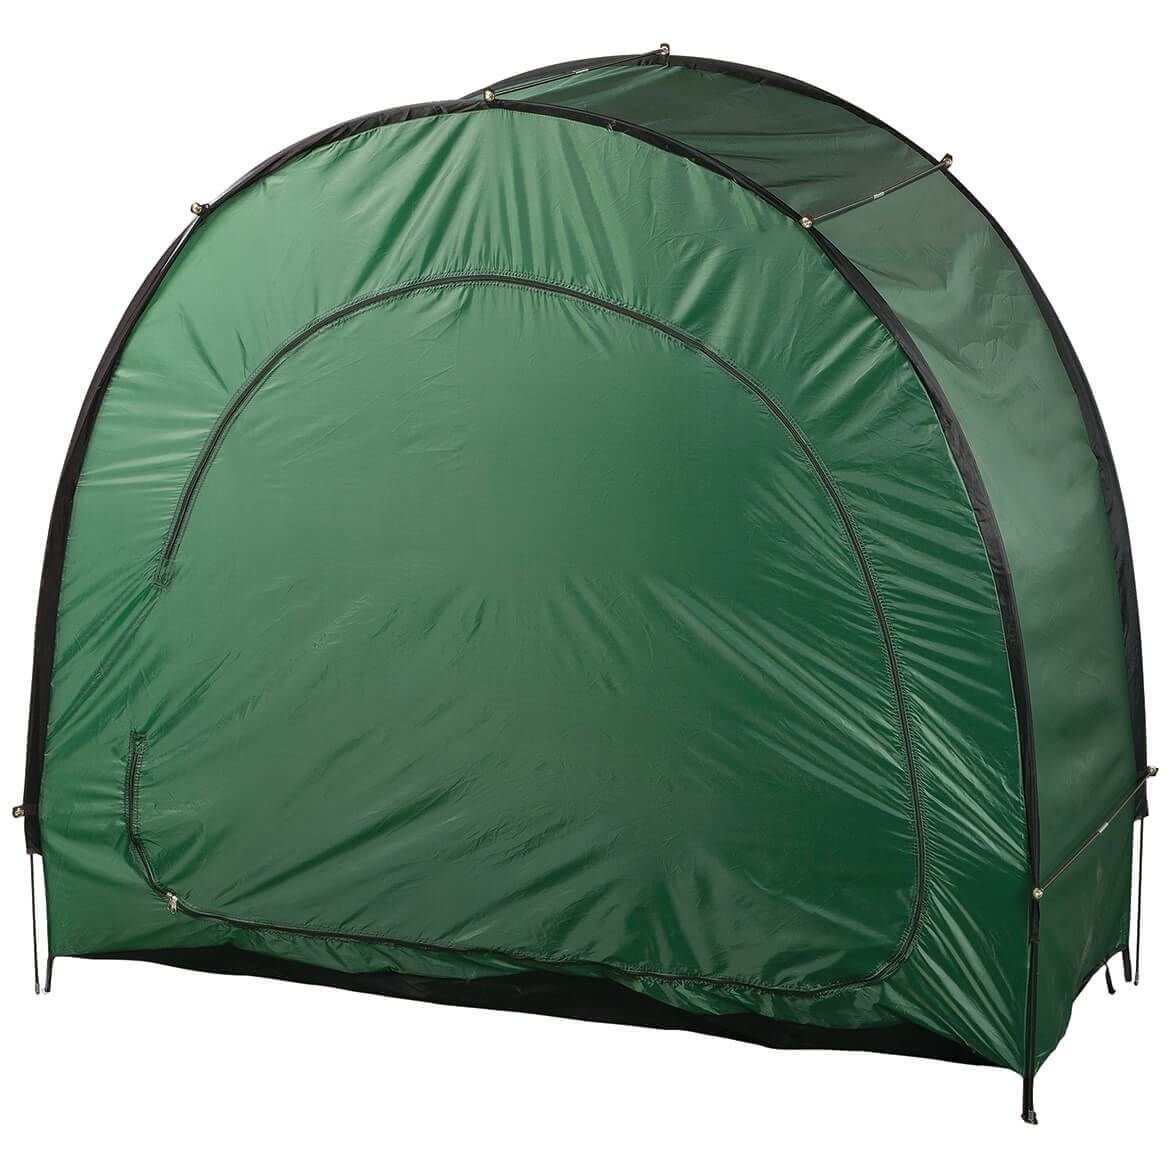 Storage Tent + '-' + 363152